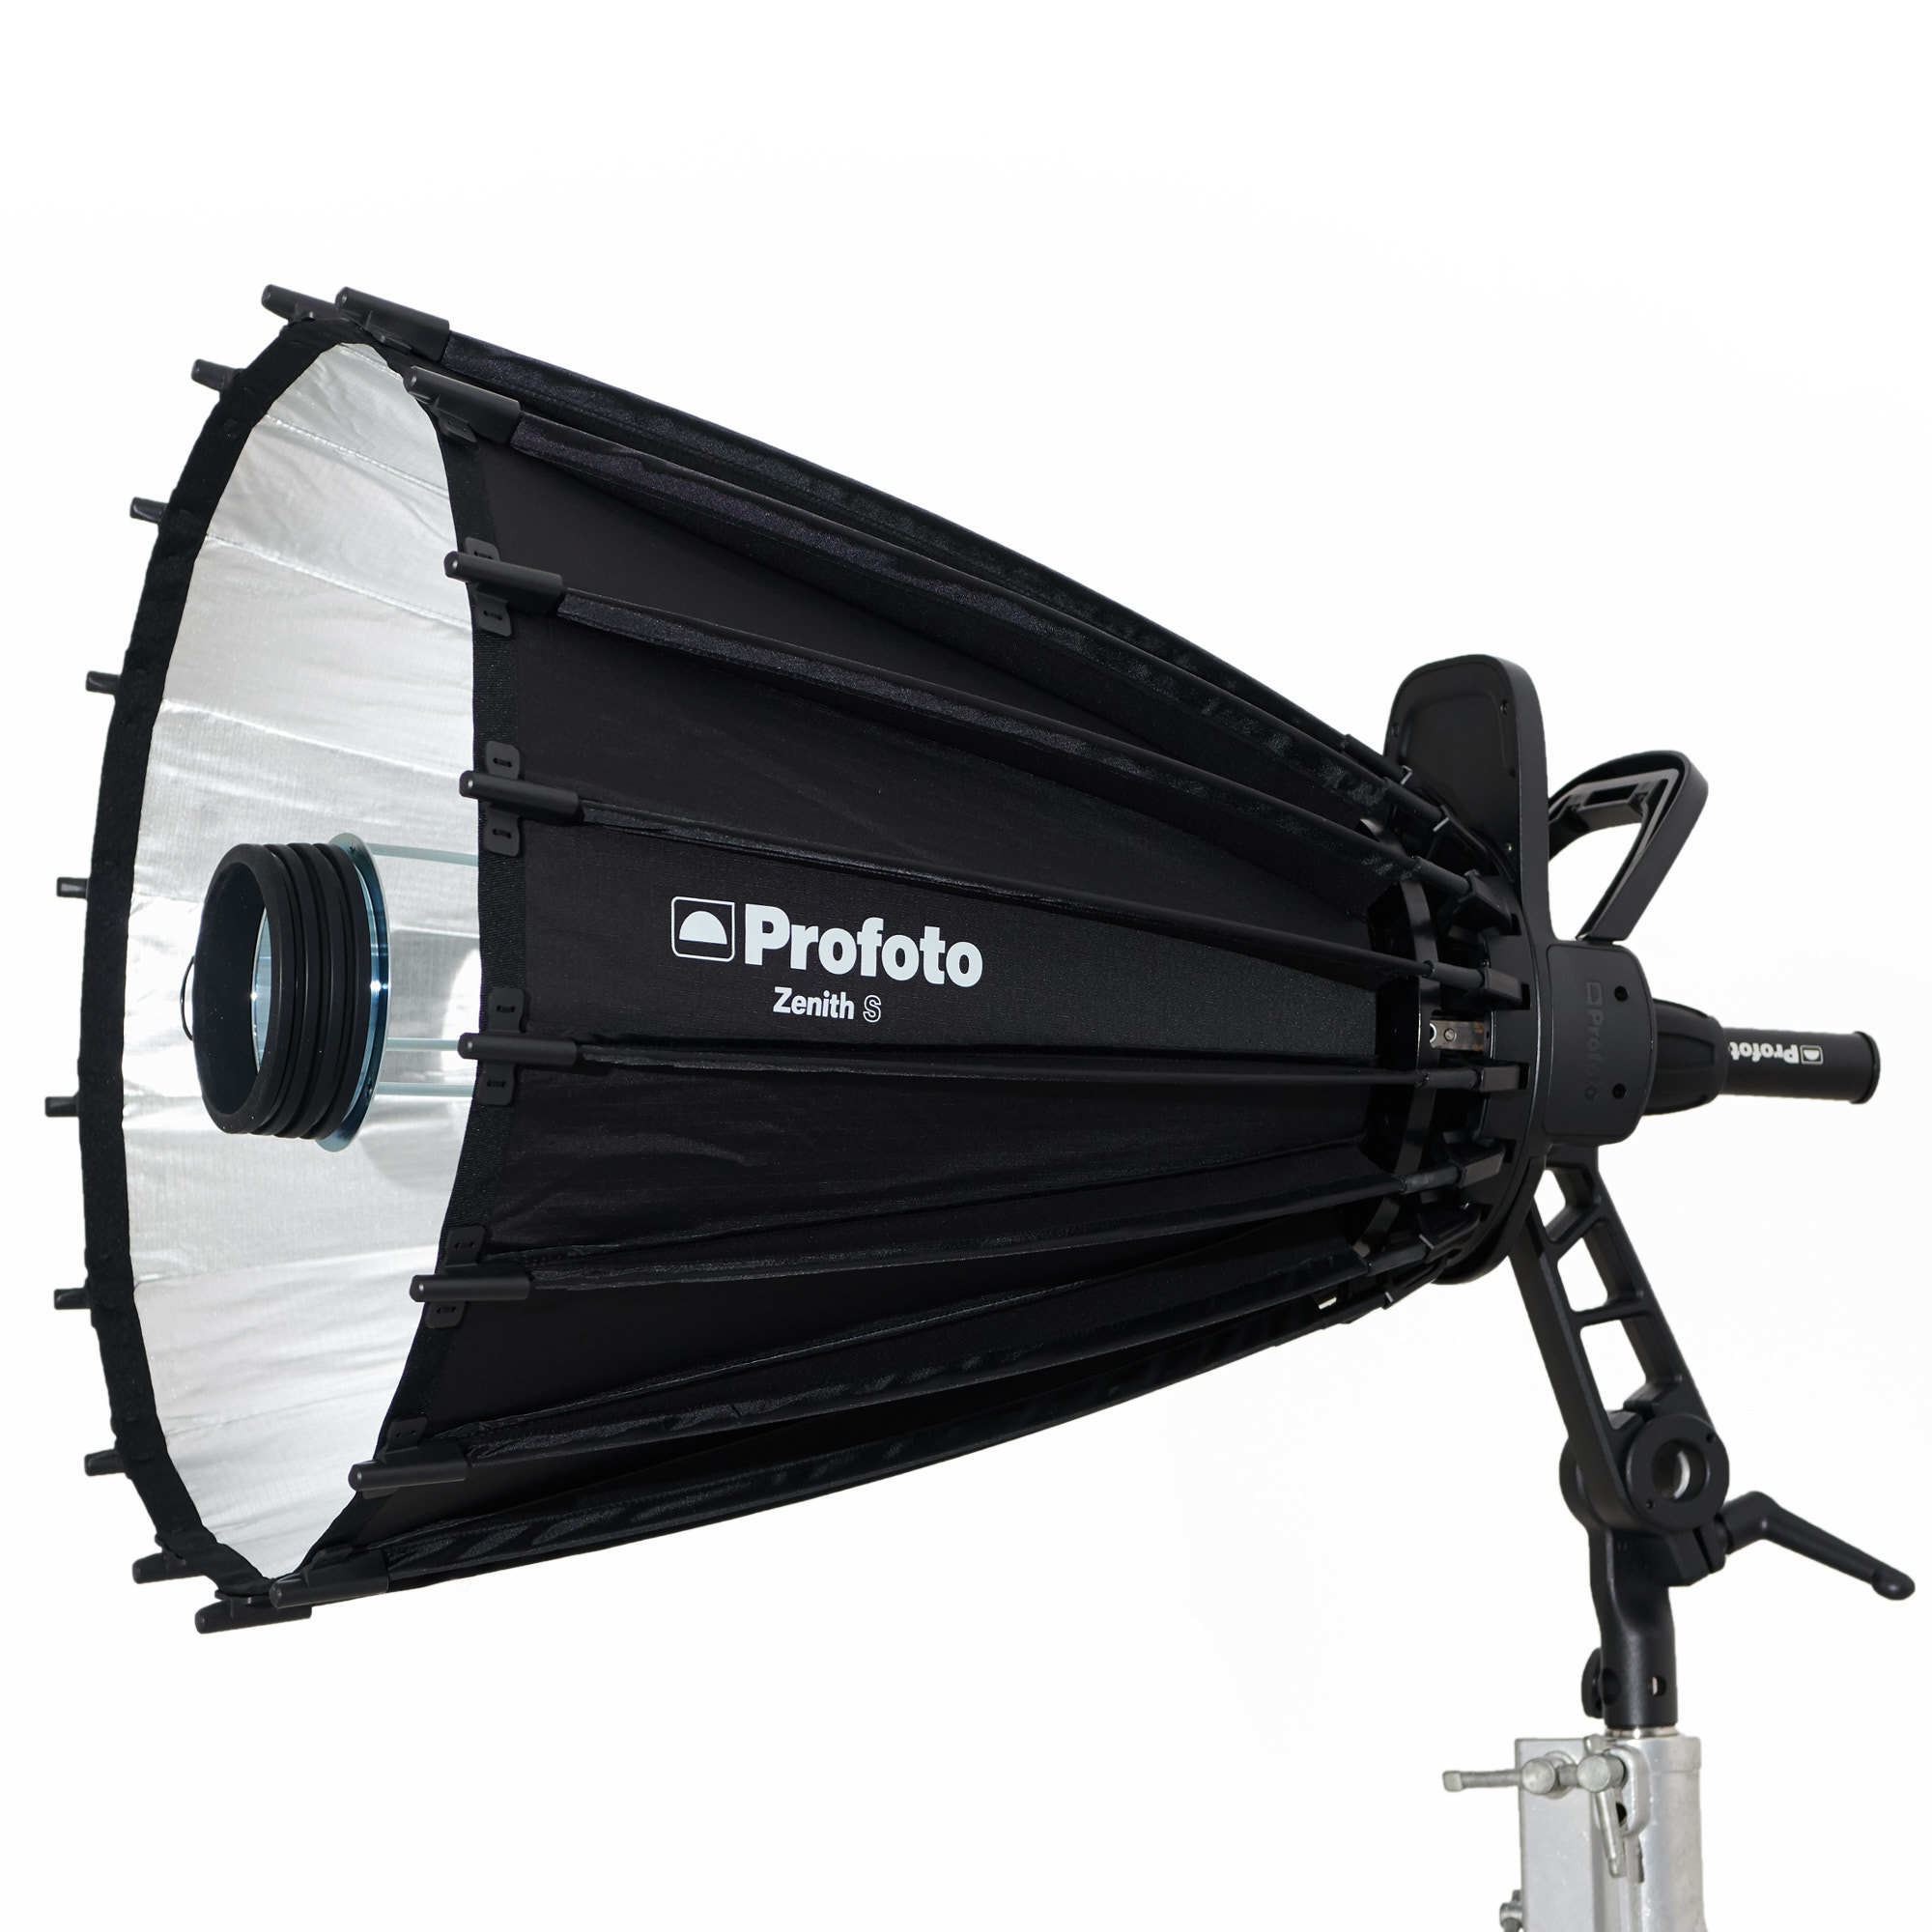 profoto-zenith-s-parabolic-reflector